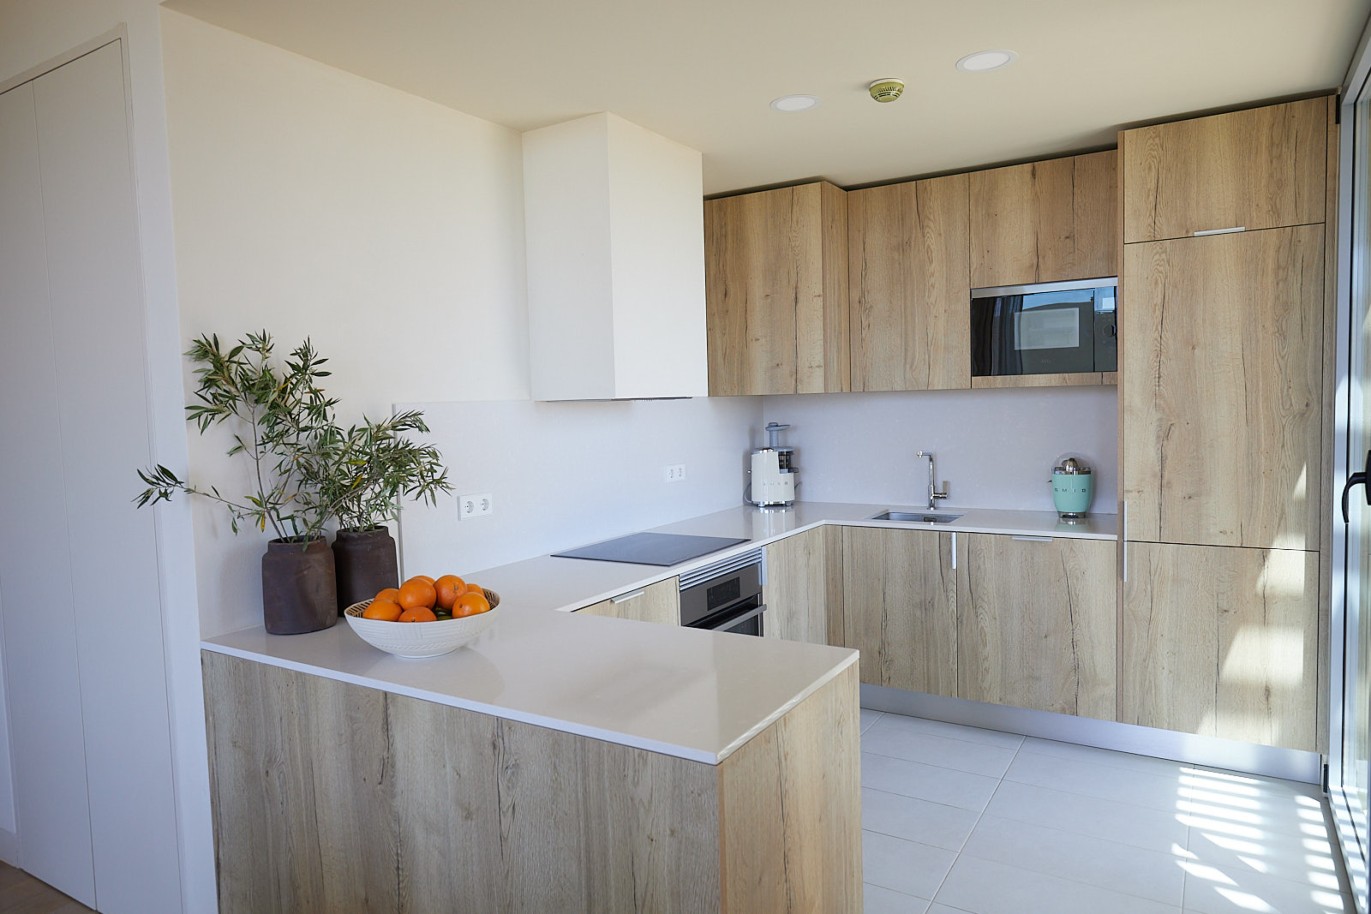 3 bedroom apartment in resort, for sale in Porches, Algarve_230745